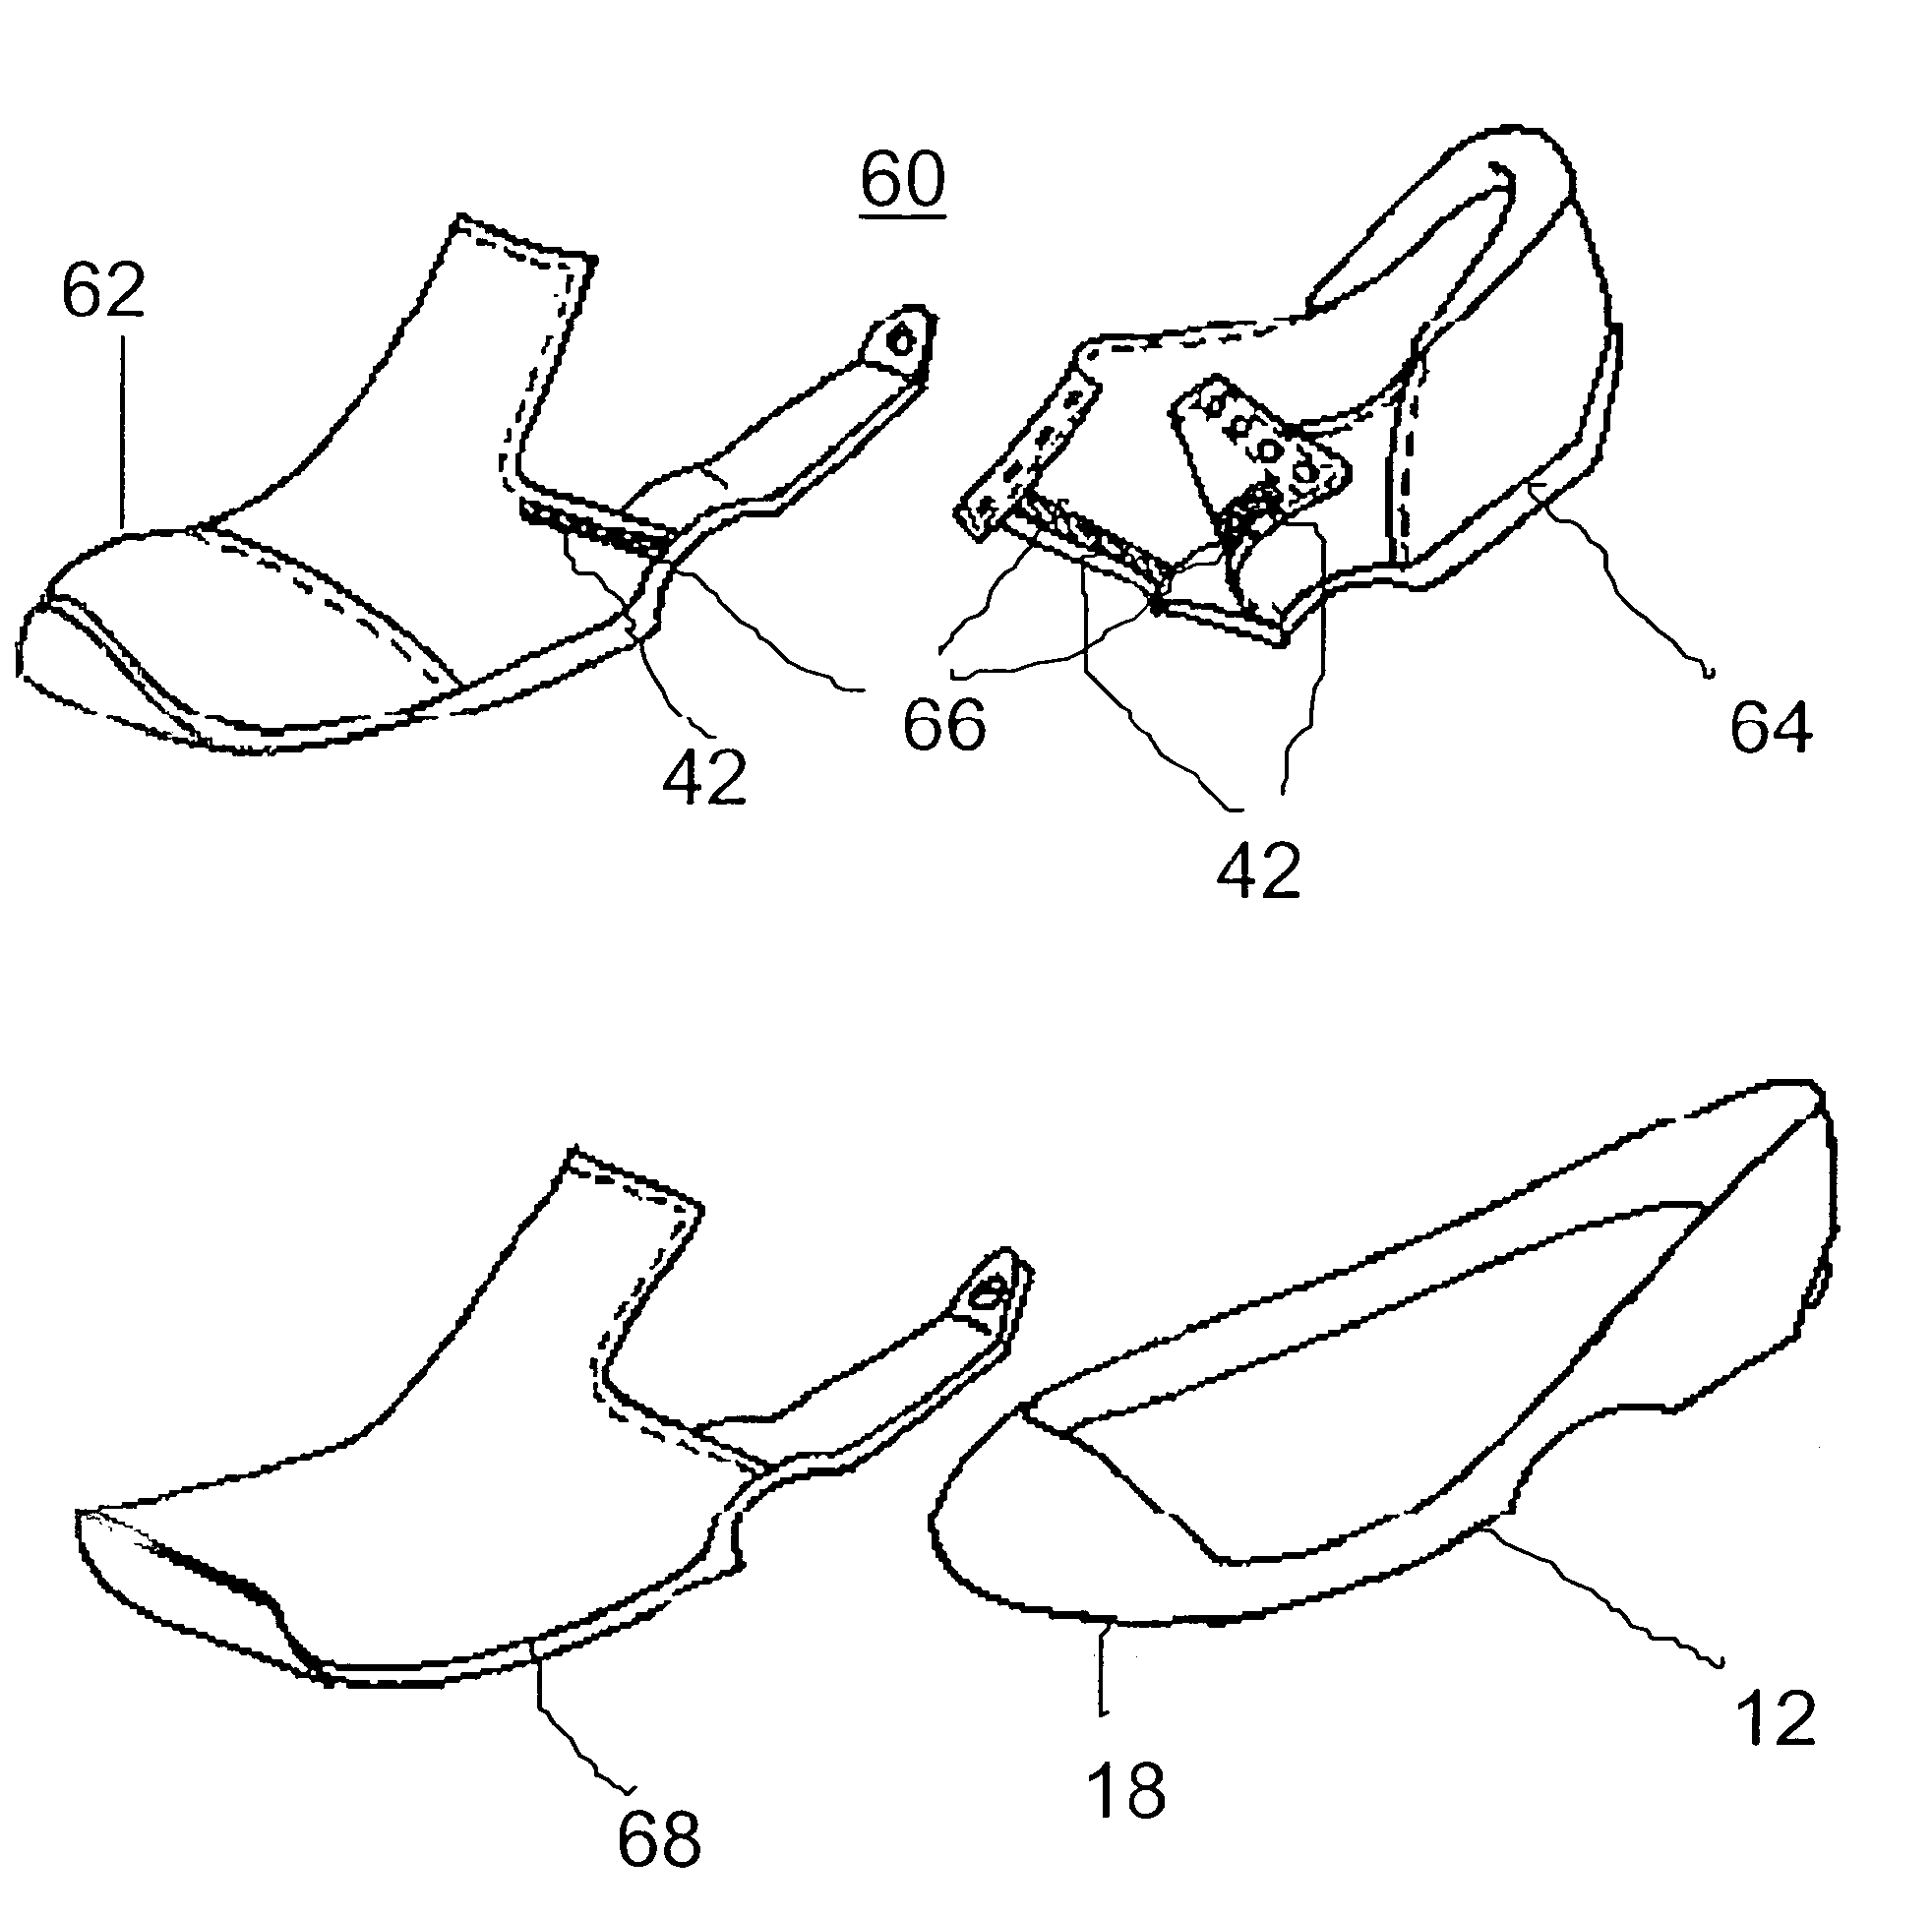 Modular shoe system